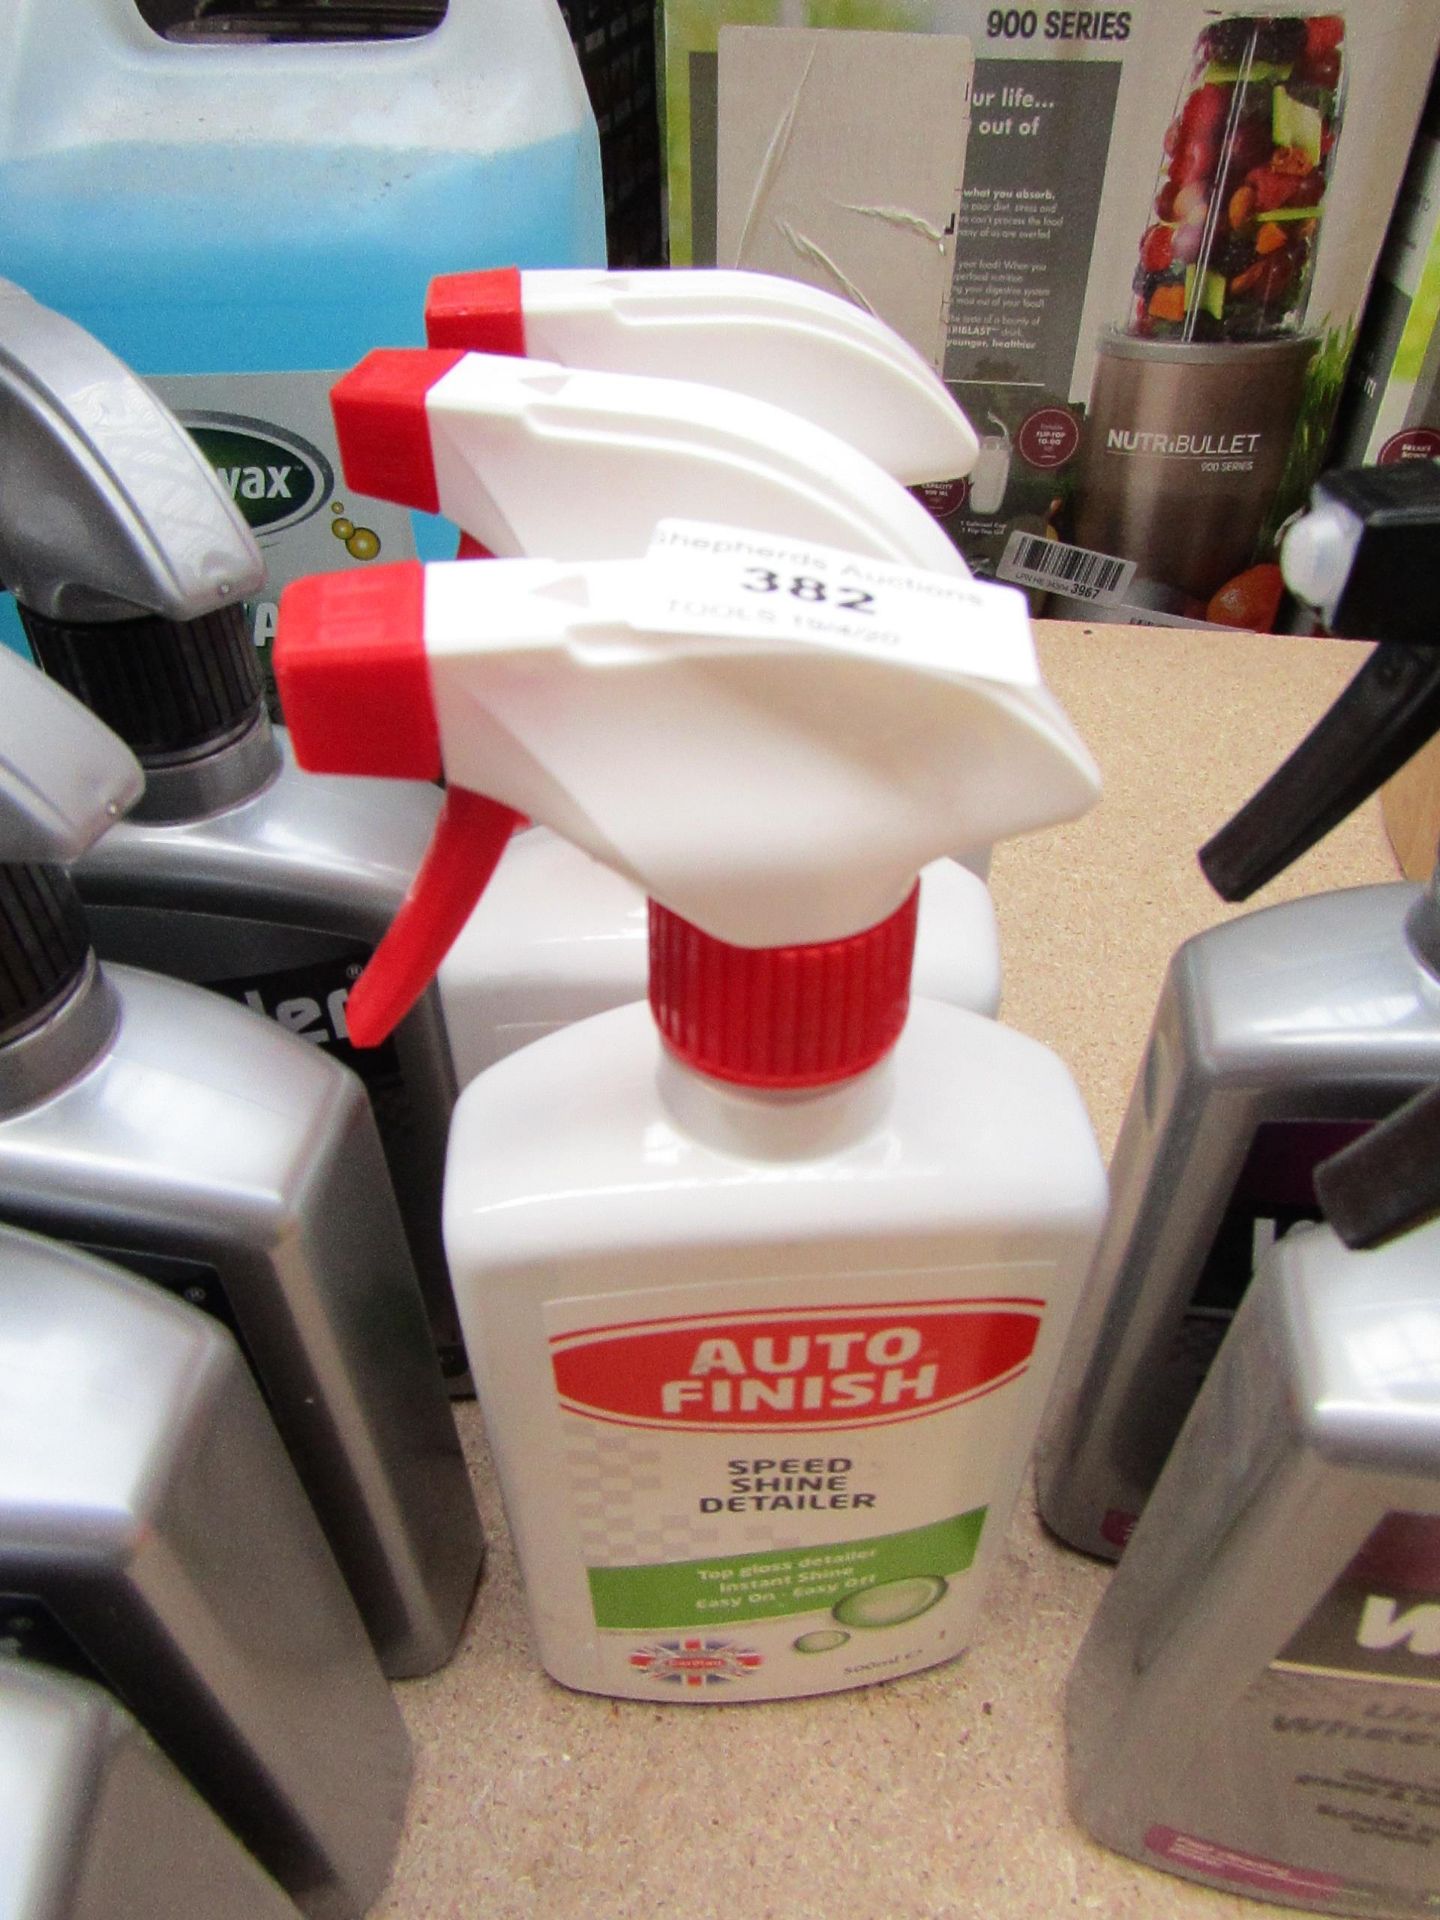 3x 500ml Spray bottles of Auto Finish Speed Shine Detailer, new